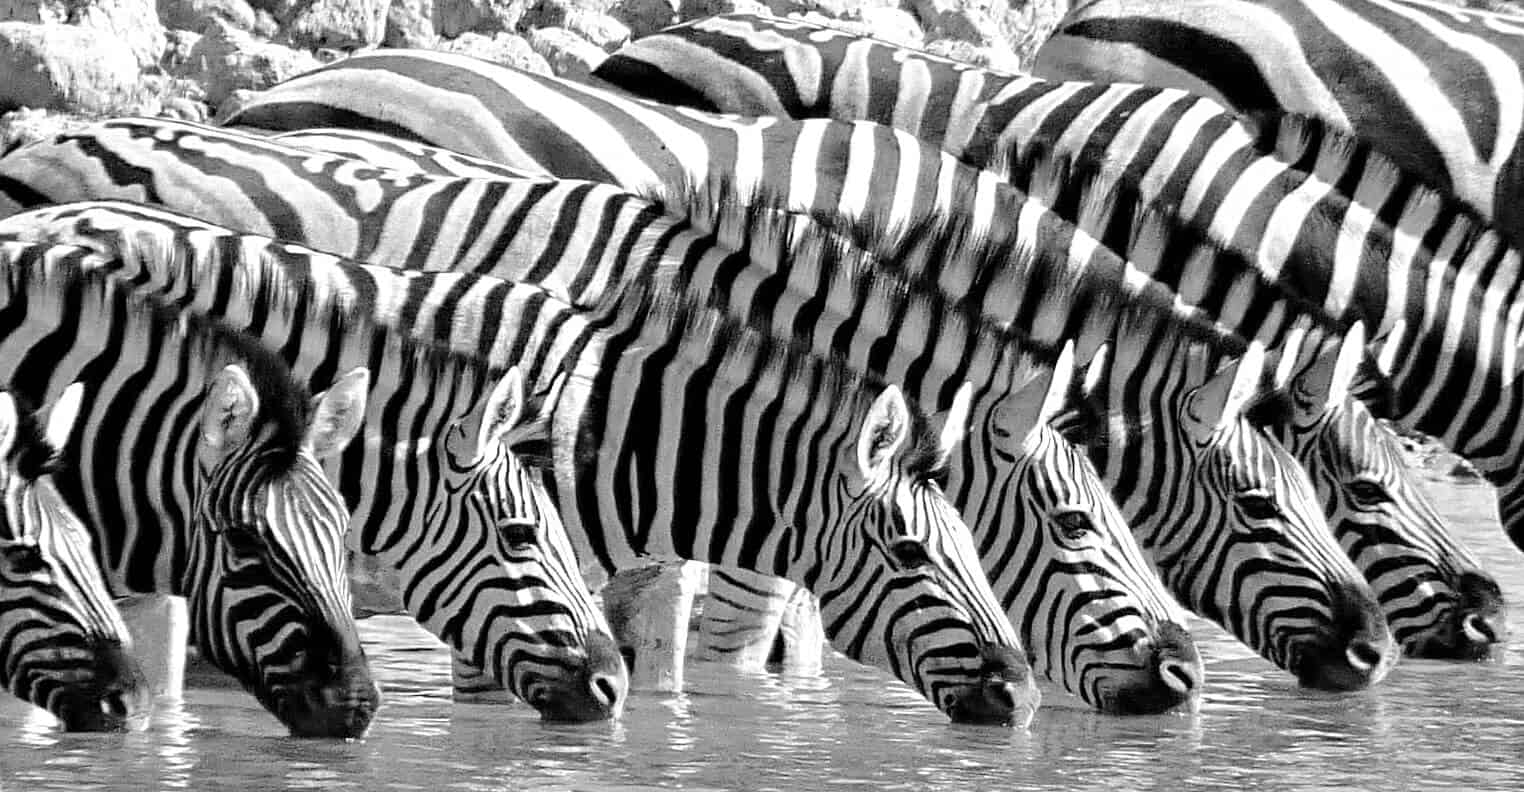 Zebras, Namibia